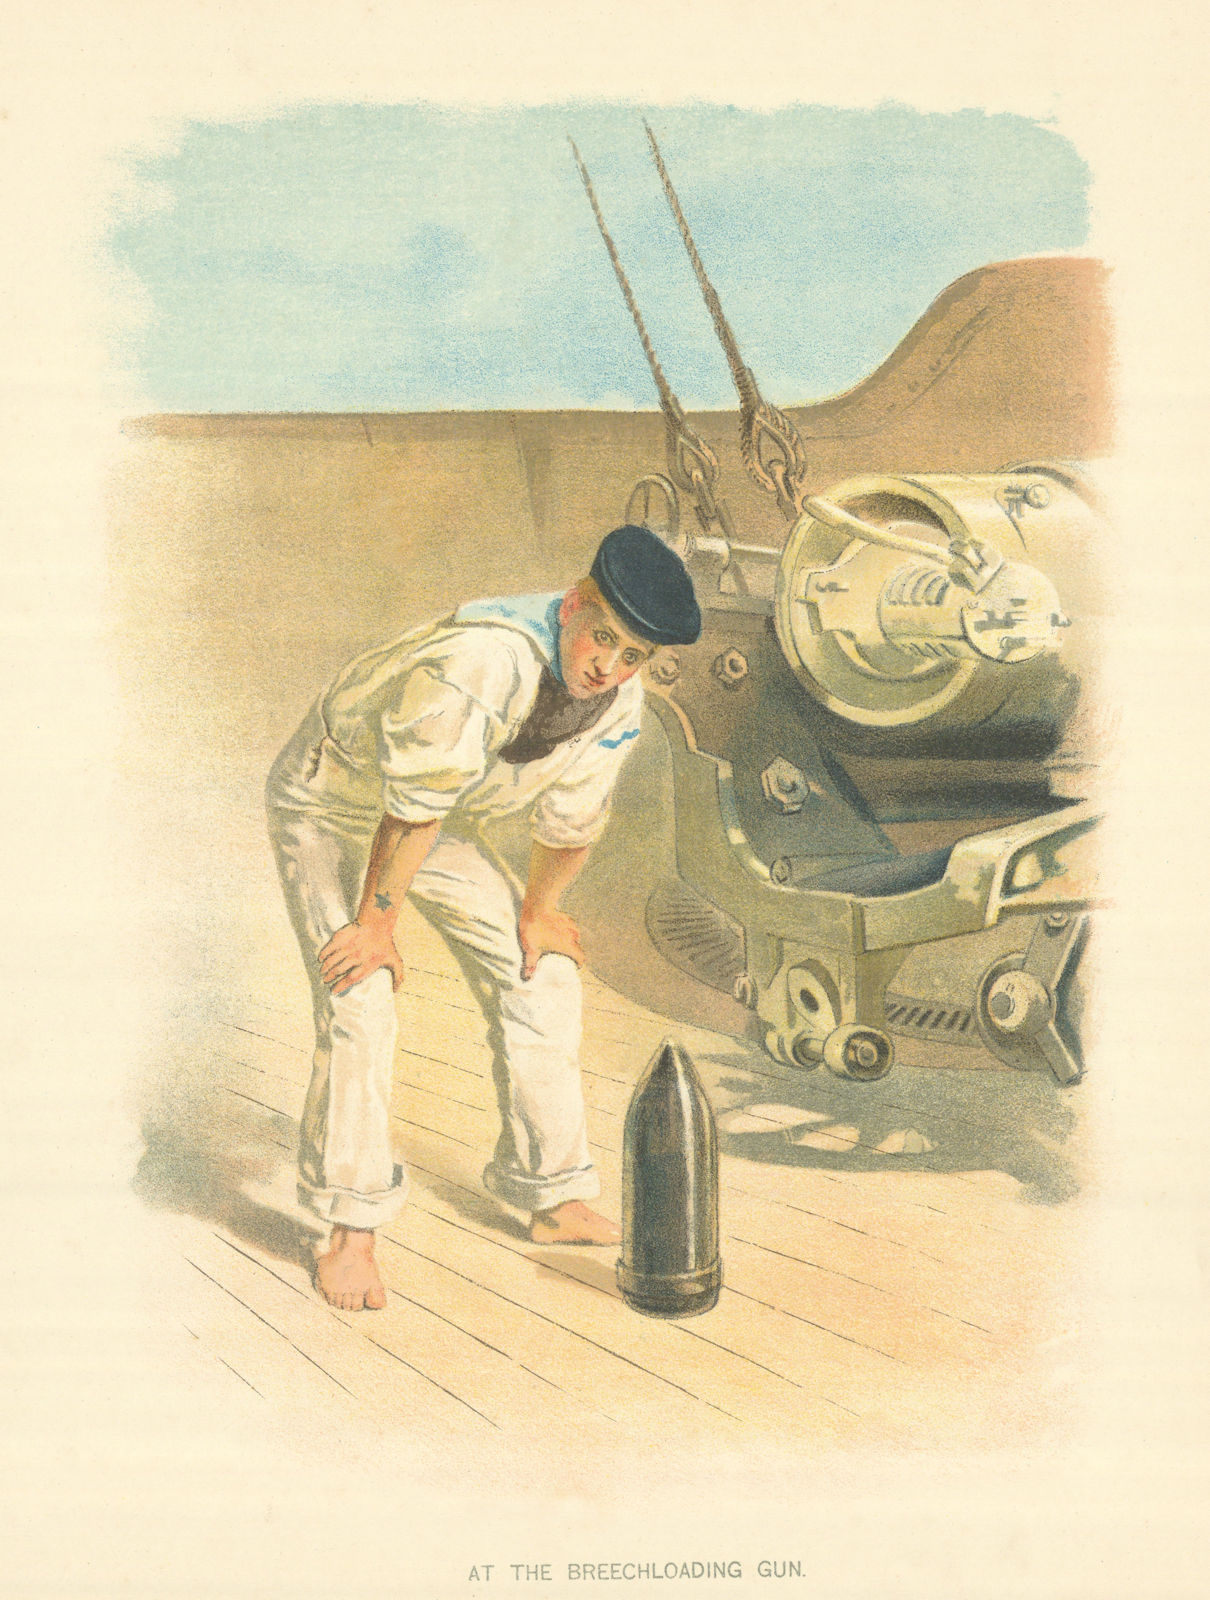 At the breechloading gun by W.C. Symons. Royal Navy 1893 old antique print